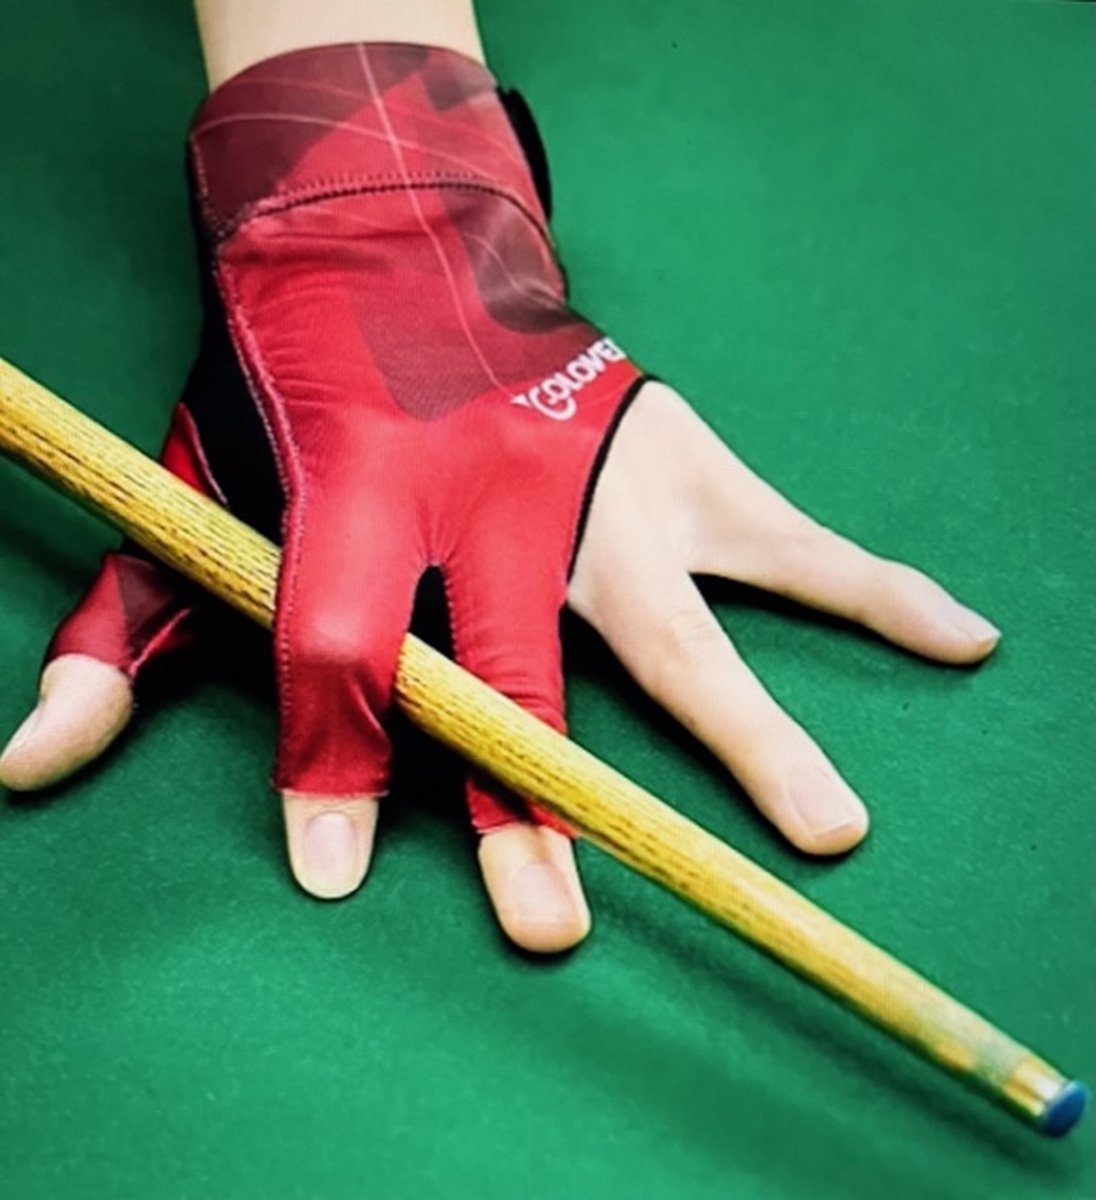 Biljart handschoen rood met anti slip en klitteband